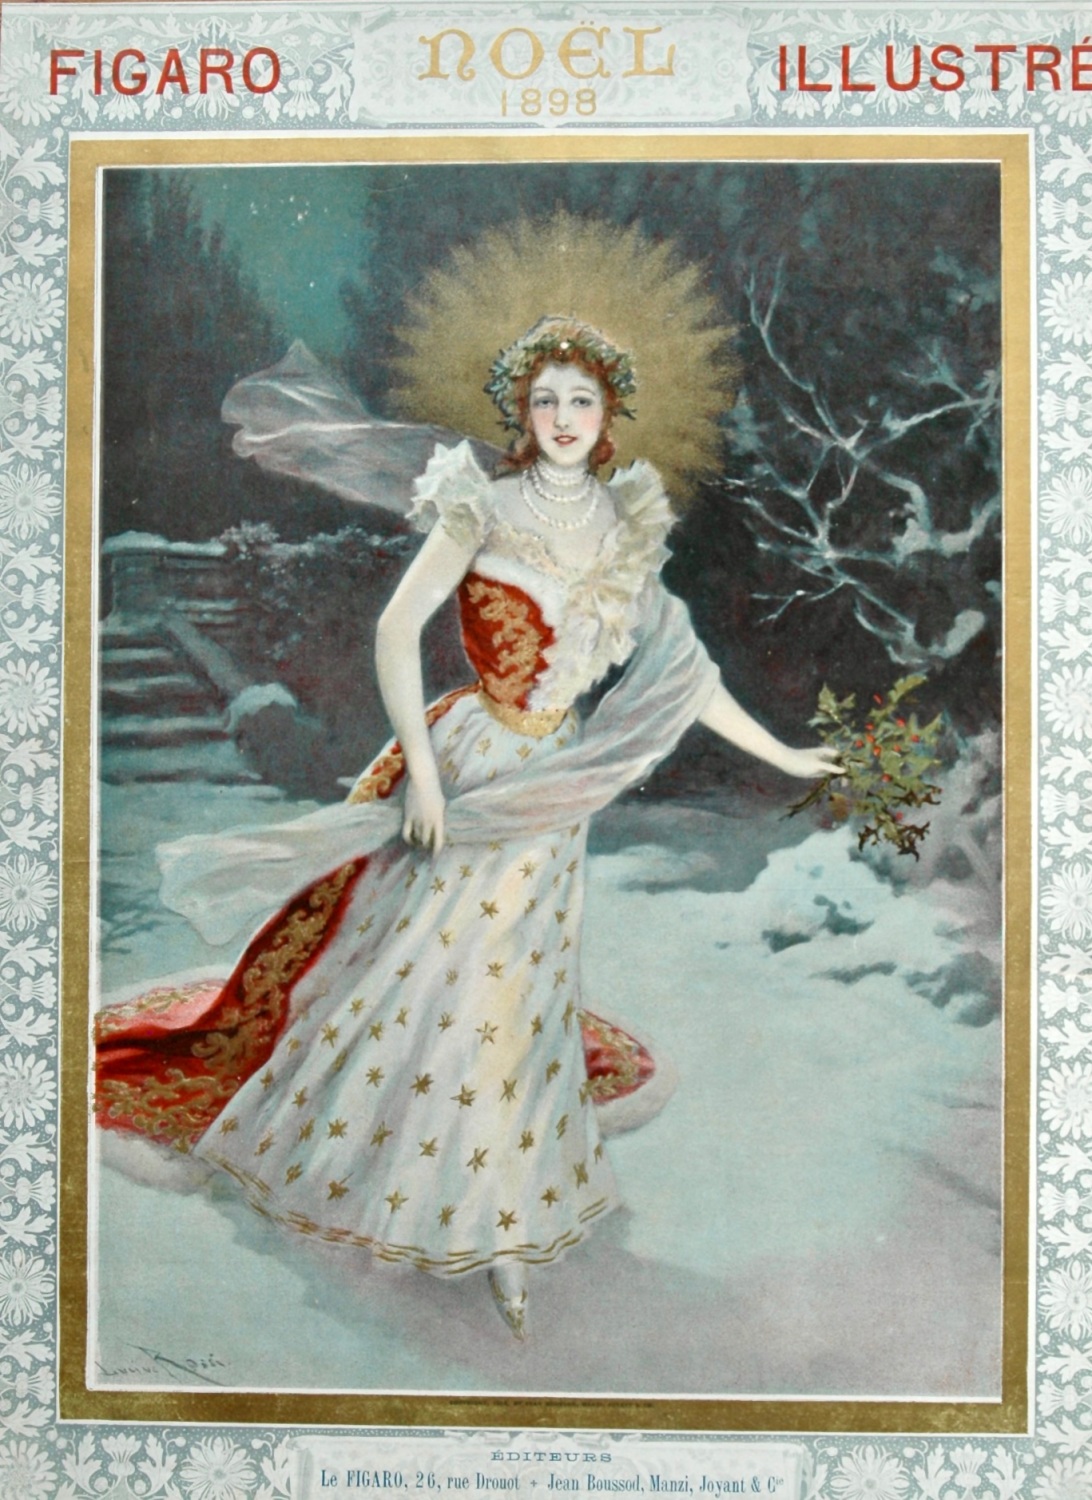 Figaro Illustre - Noel 1898.